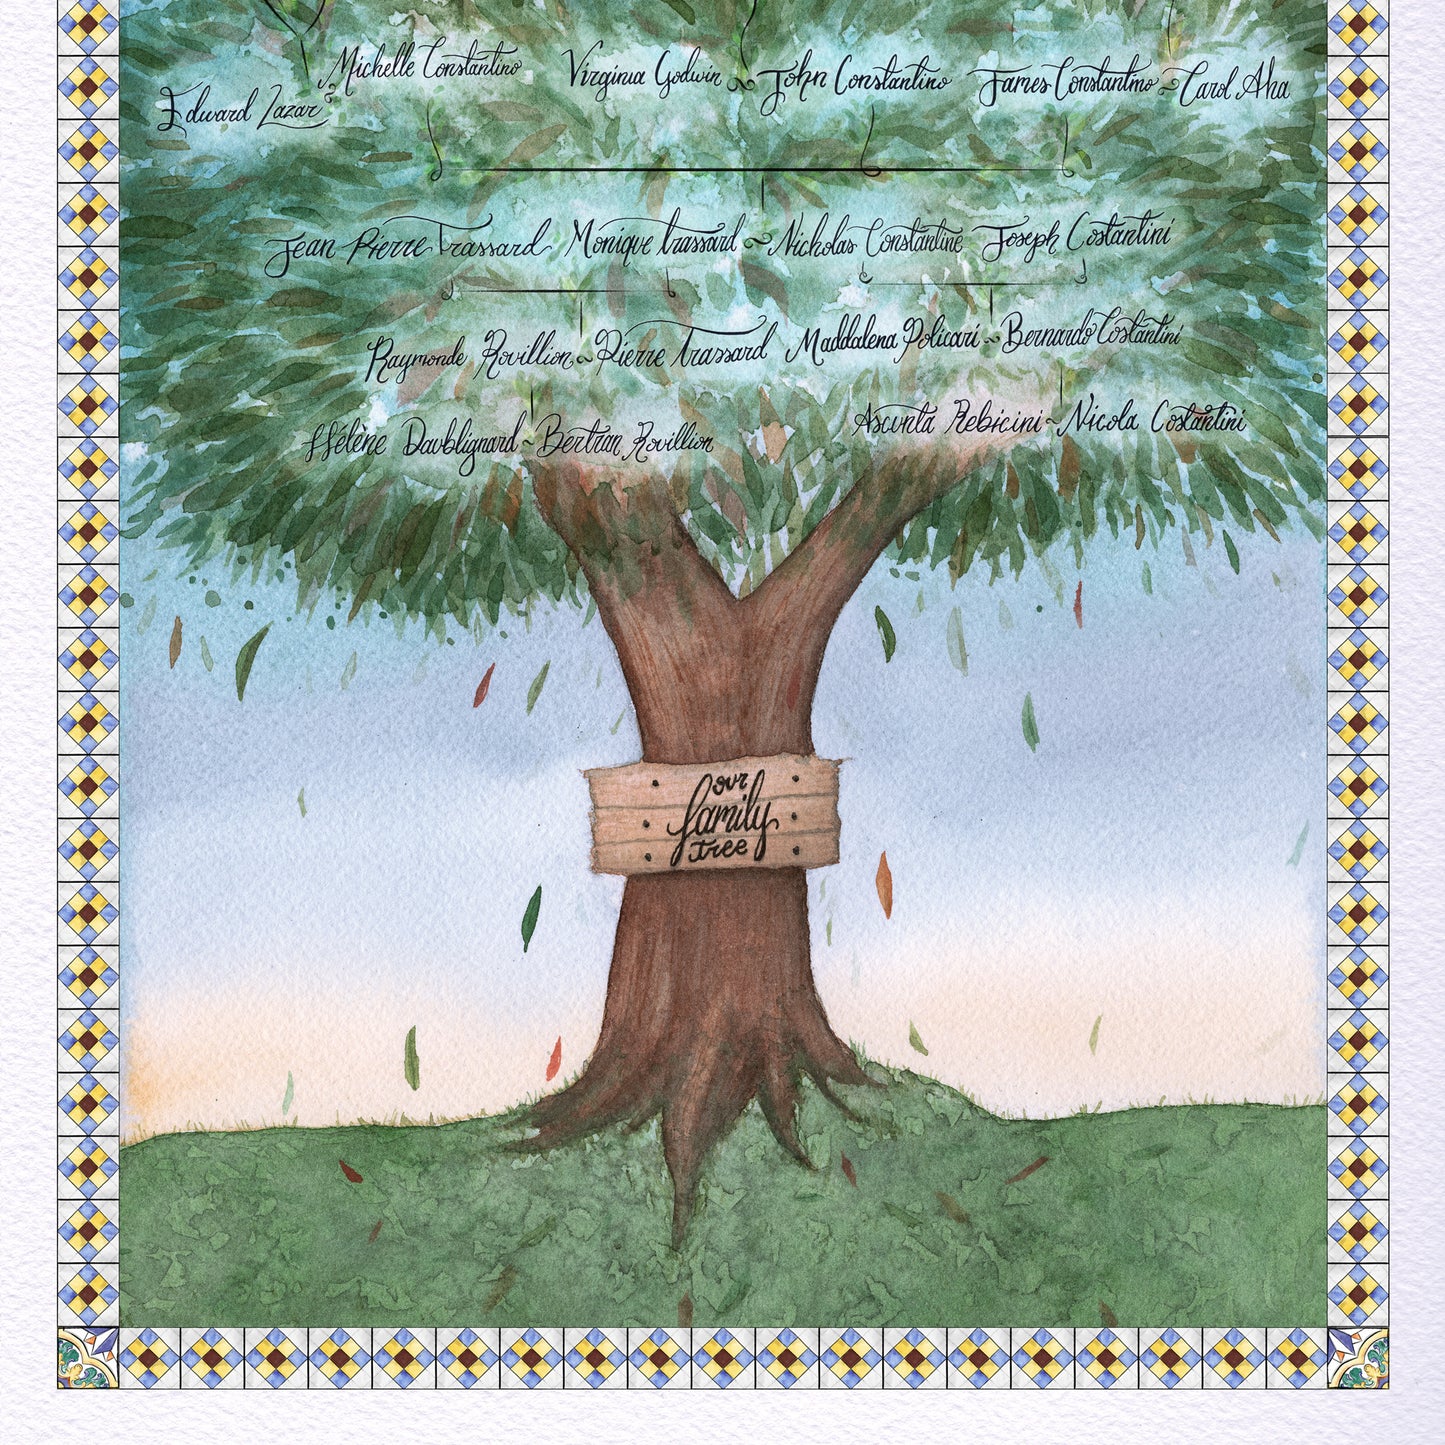 Jennifer Constantino's Family Tree Framed Print